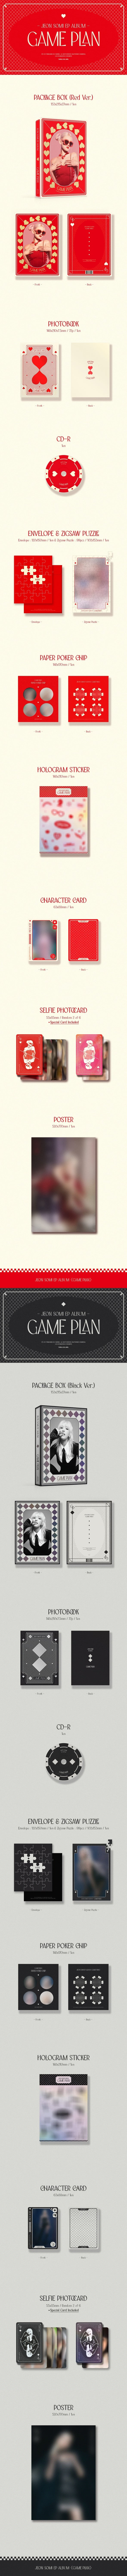 JEON SOMI - EP Album - [GAME PLAN] Photobook - Kpop Music 사랑해요